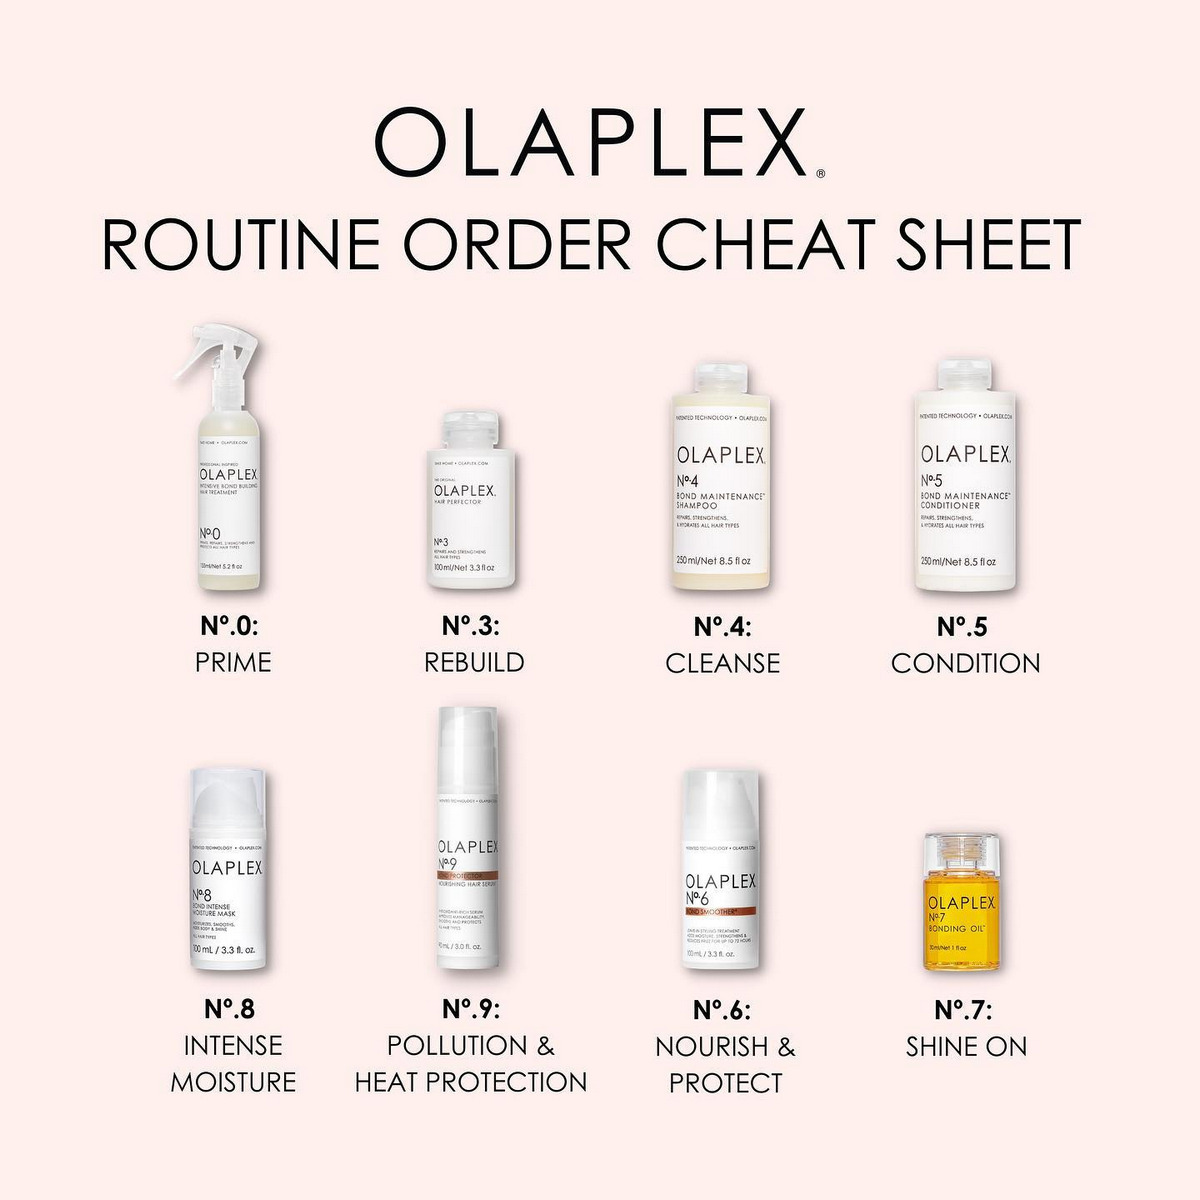 Olaplex products via olaplex